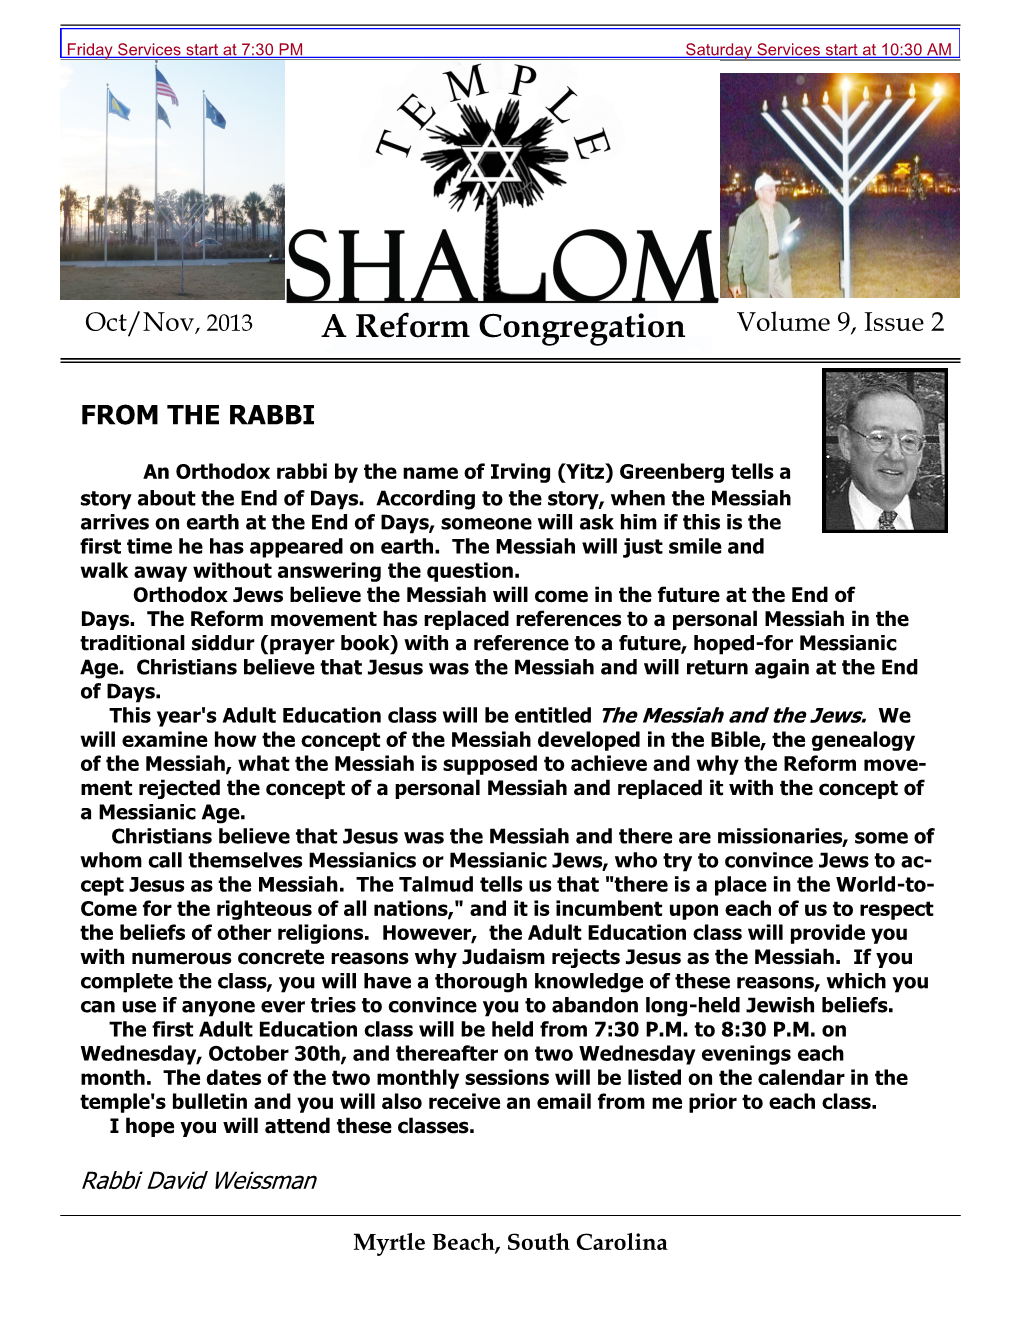 A Reform Congregation Volume 9, Issue 2